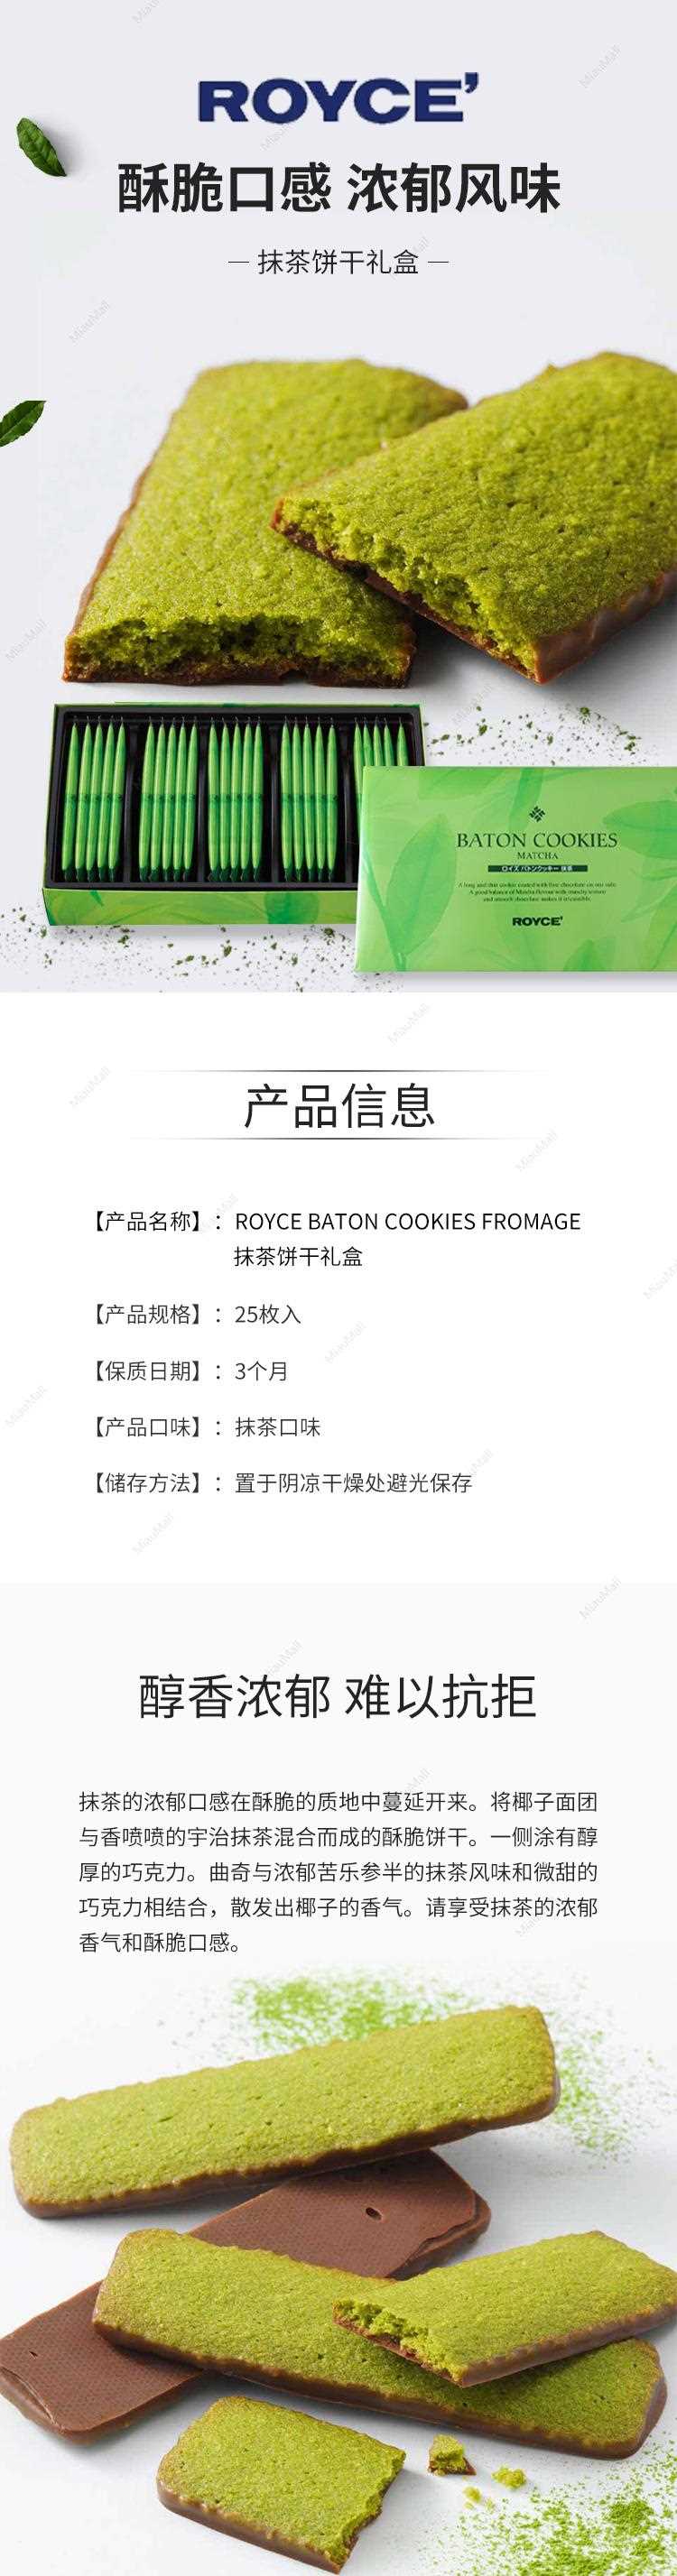 ROYCE-BATON-COOKIES-FROMAGE-抹茶饼干礼盒25枚入_01.jpg